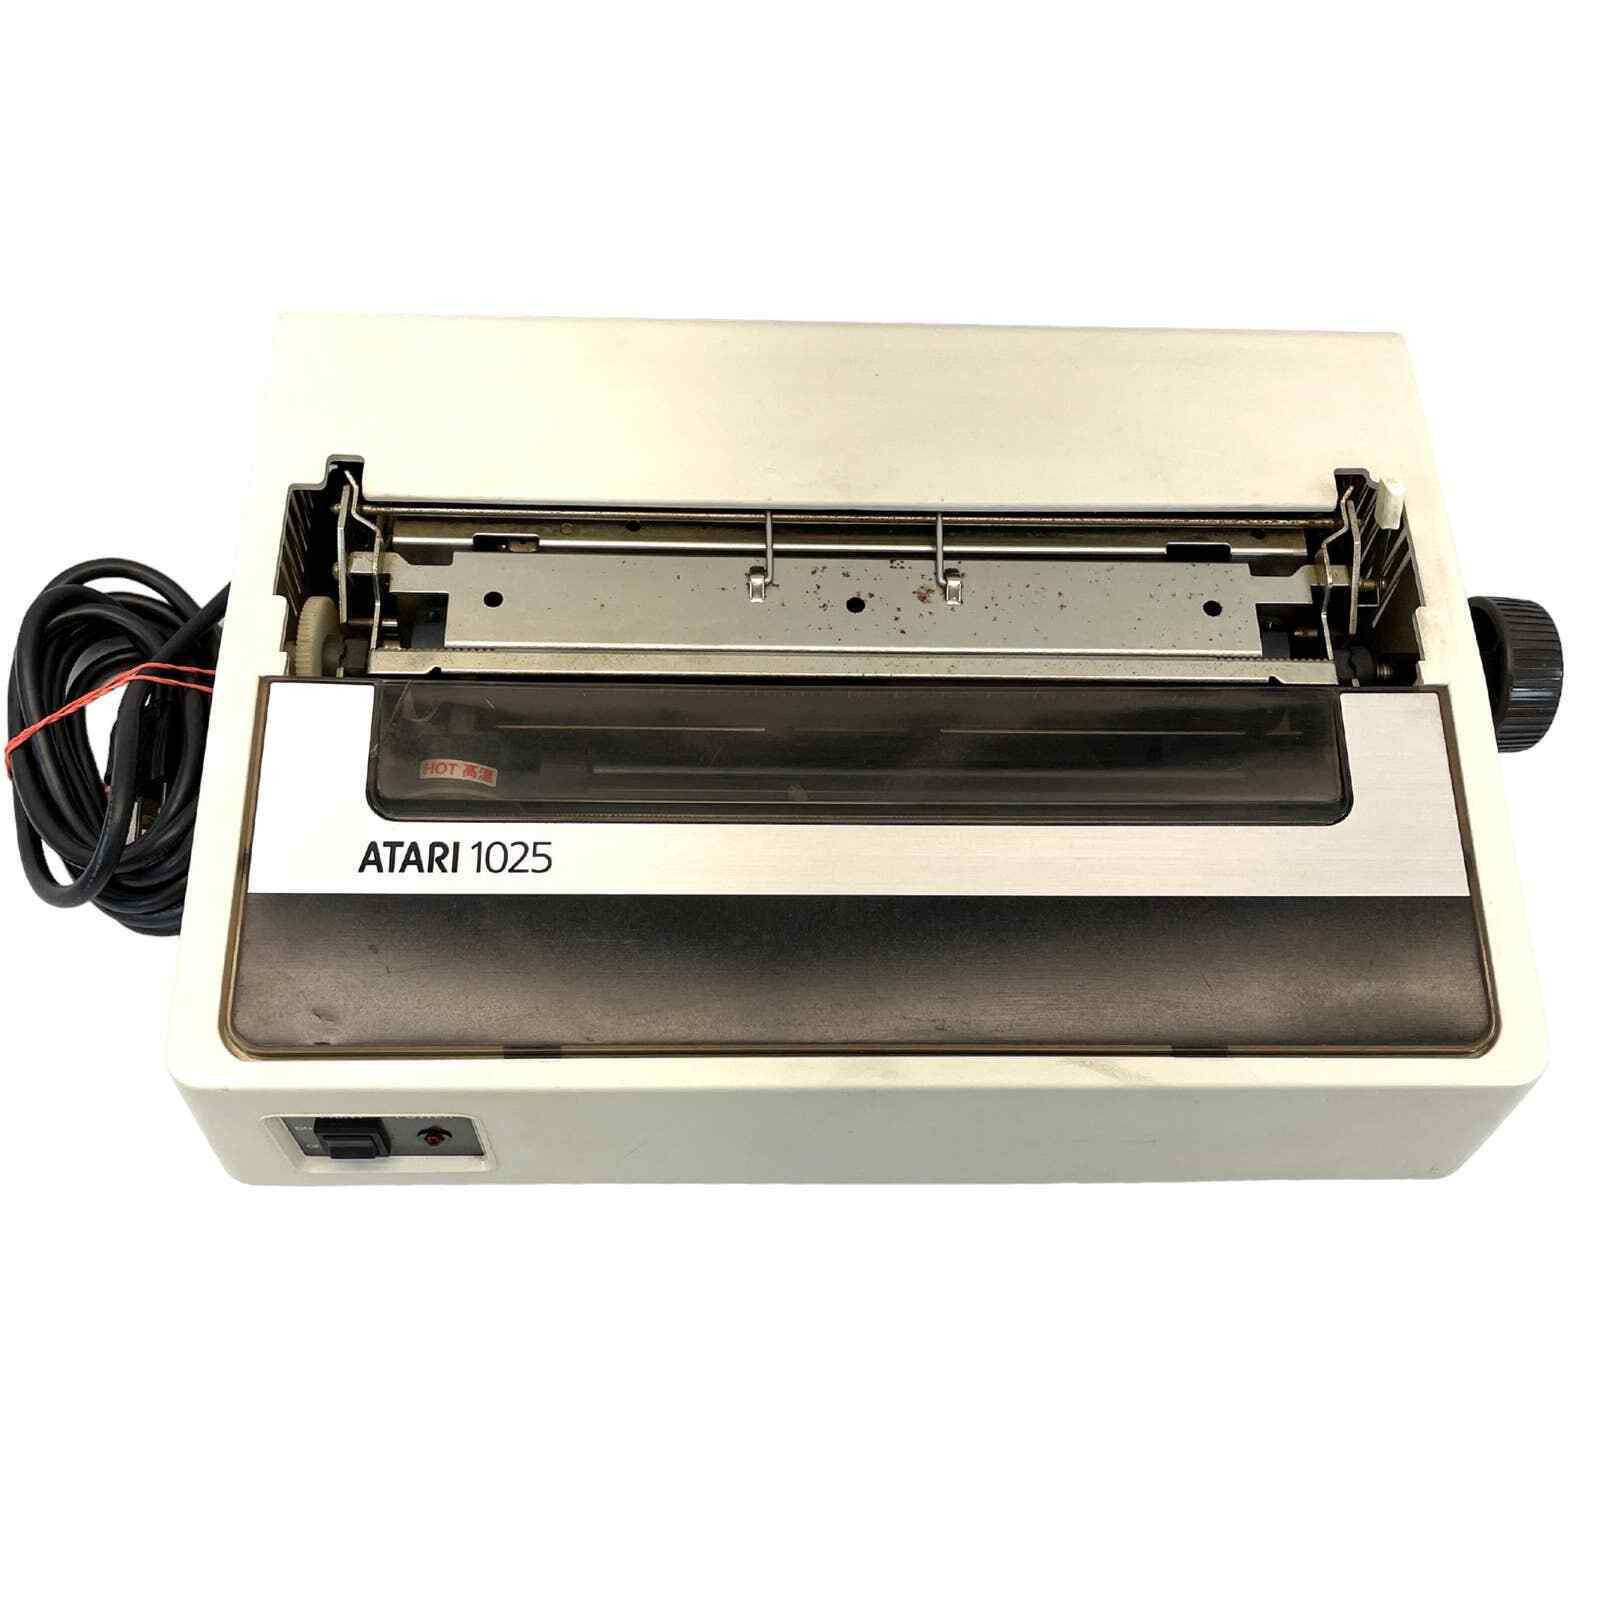 Vintage 1982 Atari 1025 Dot Matrix Printer with Dry Ribbon - Powers On Untested